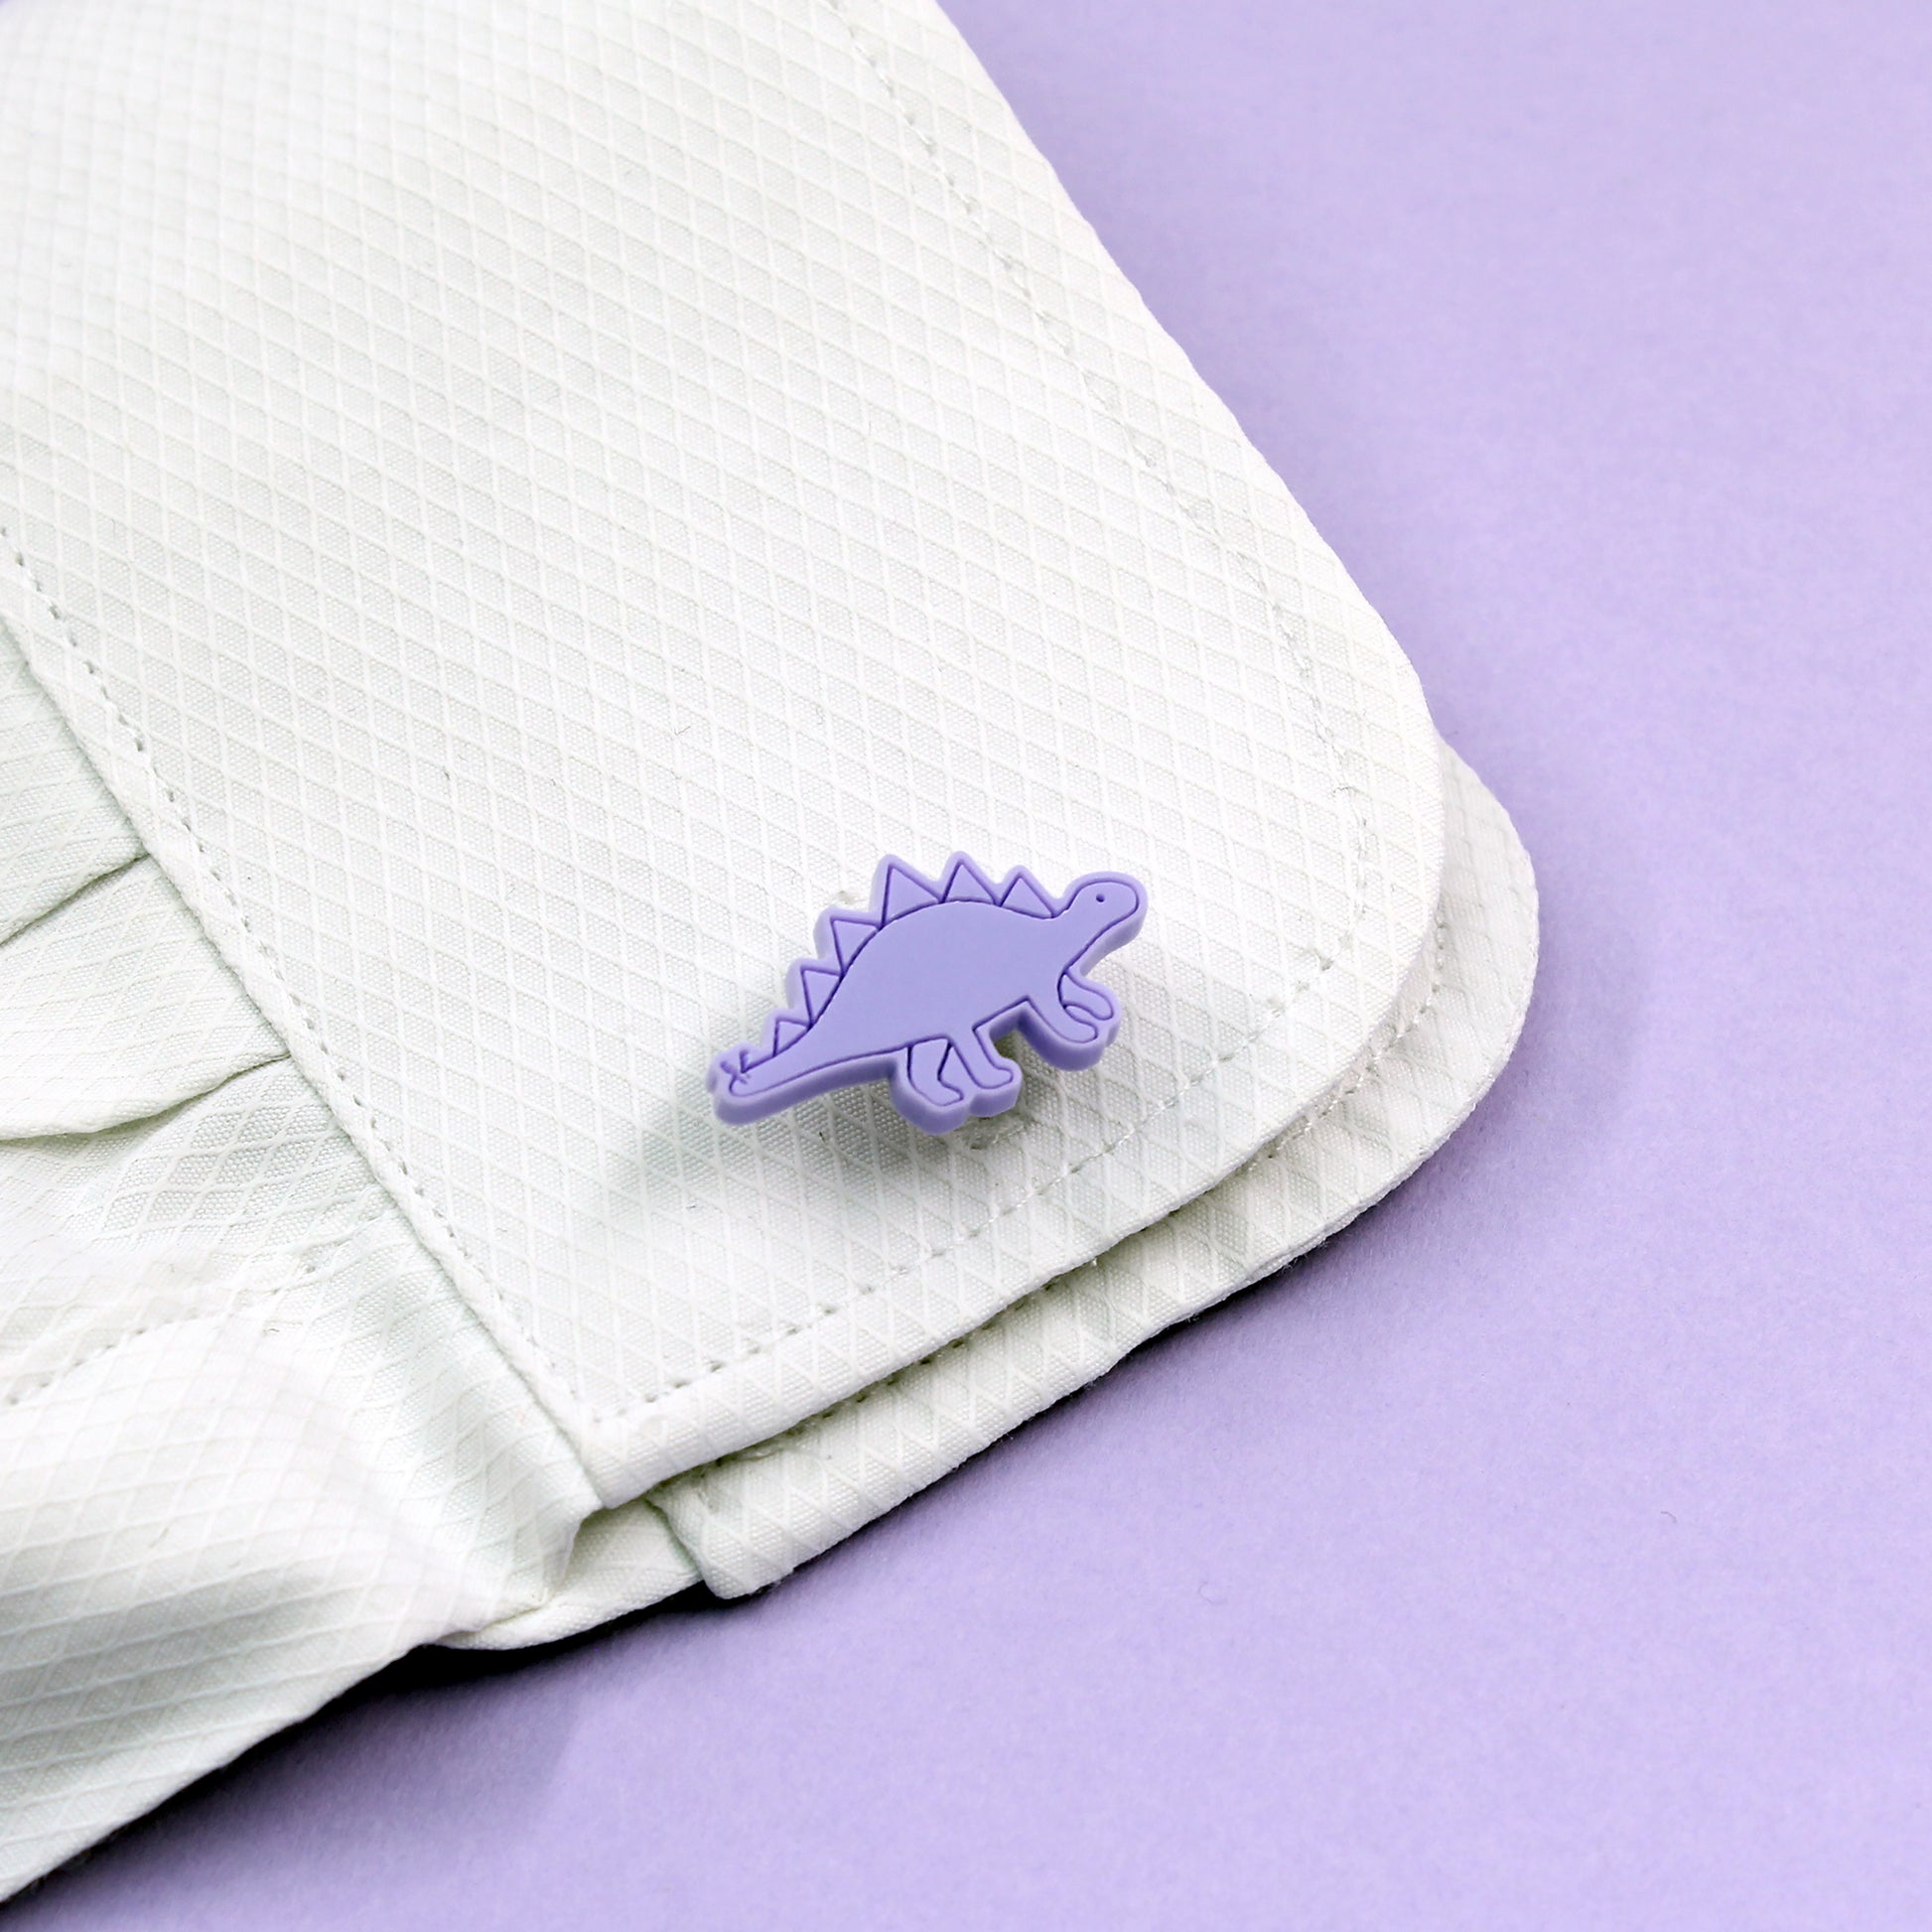 a purple stegosaurus cufflink on a white shirt cuff